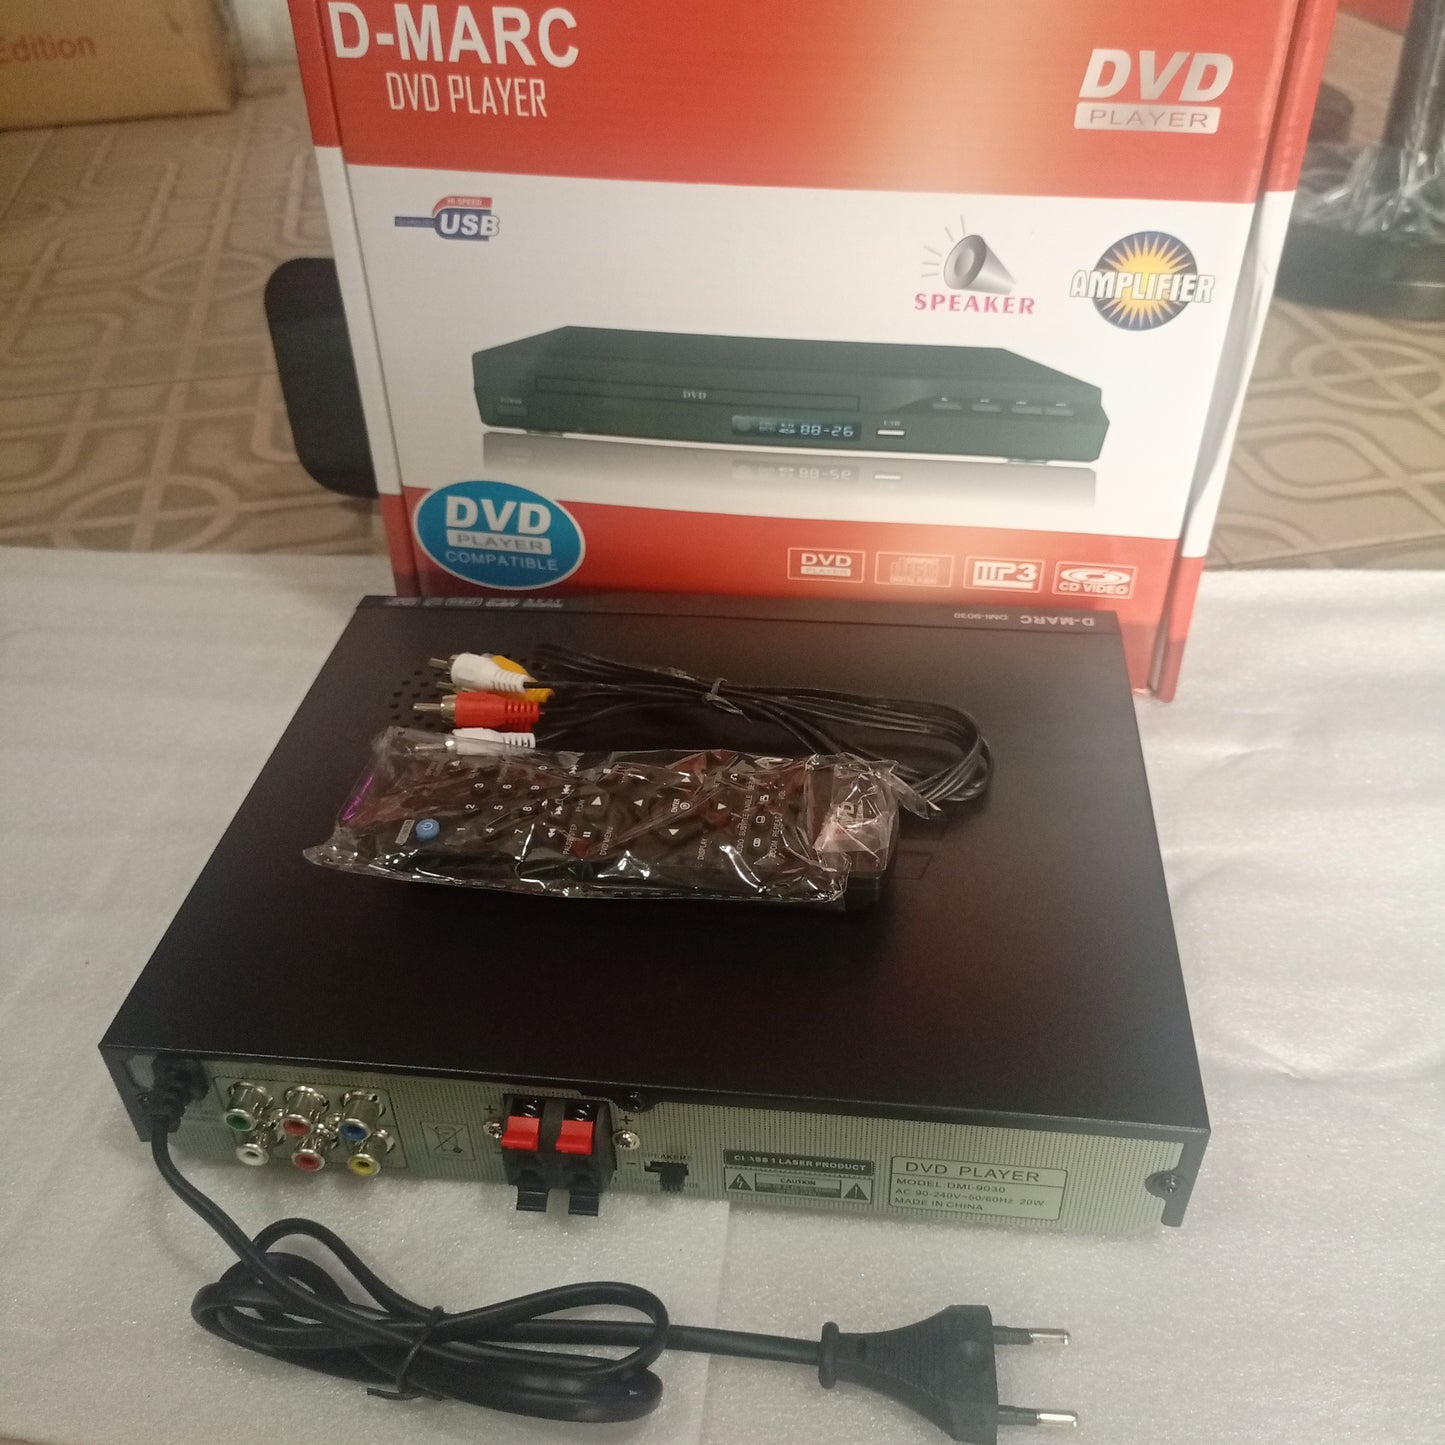 DMARC DMI-9030 Multi-Playback DVD Player + Speaker Output & Internal Speakers - Brand New